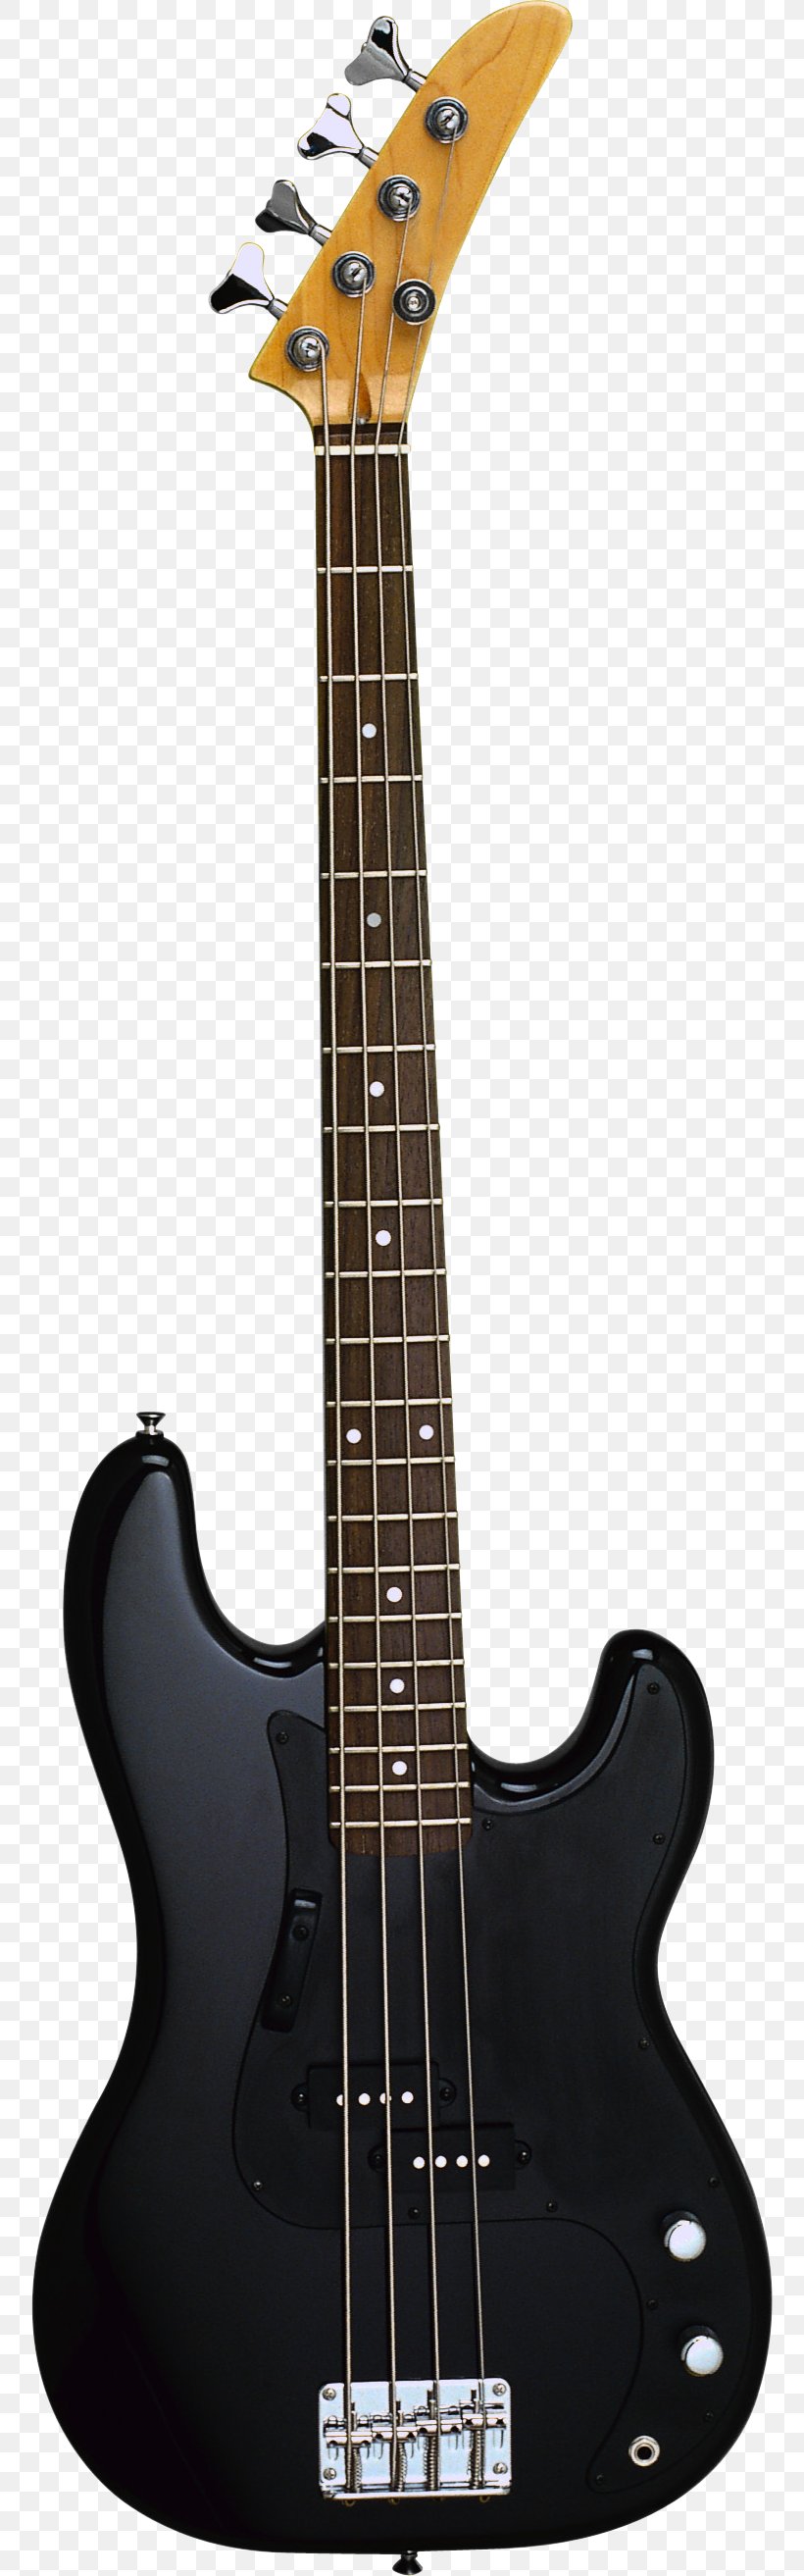 Guitar Wallpaper Png 756x2626px Guitar Acoustic Electric Guitar Acoustic Guitar Bass Guitar Electric Guitar Download Free